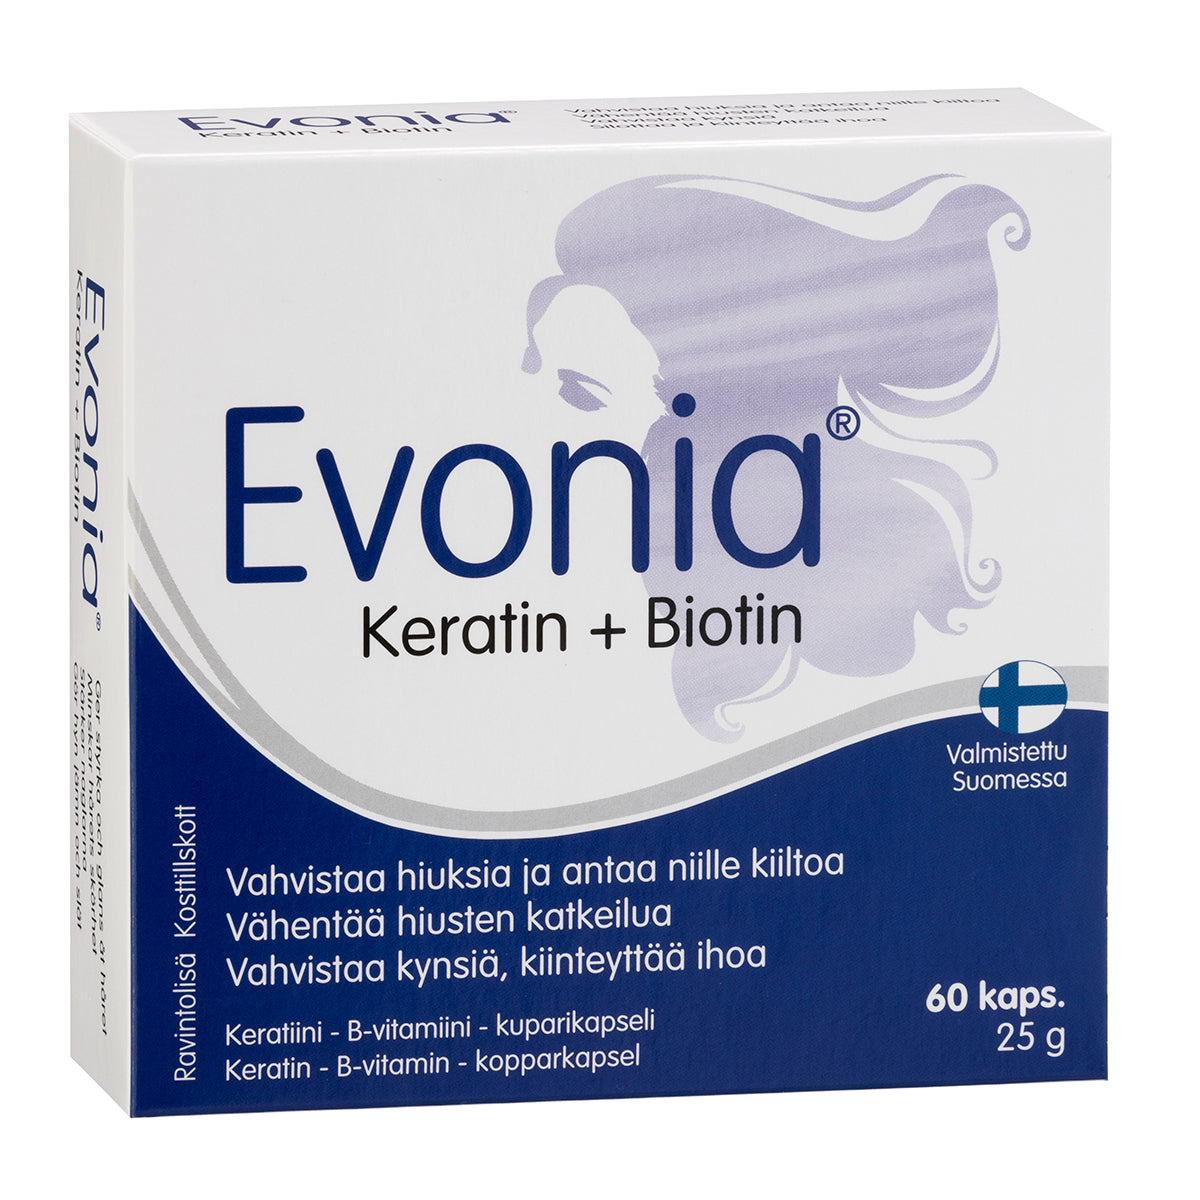 Evonia® Keratin + Biotin